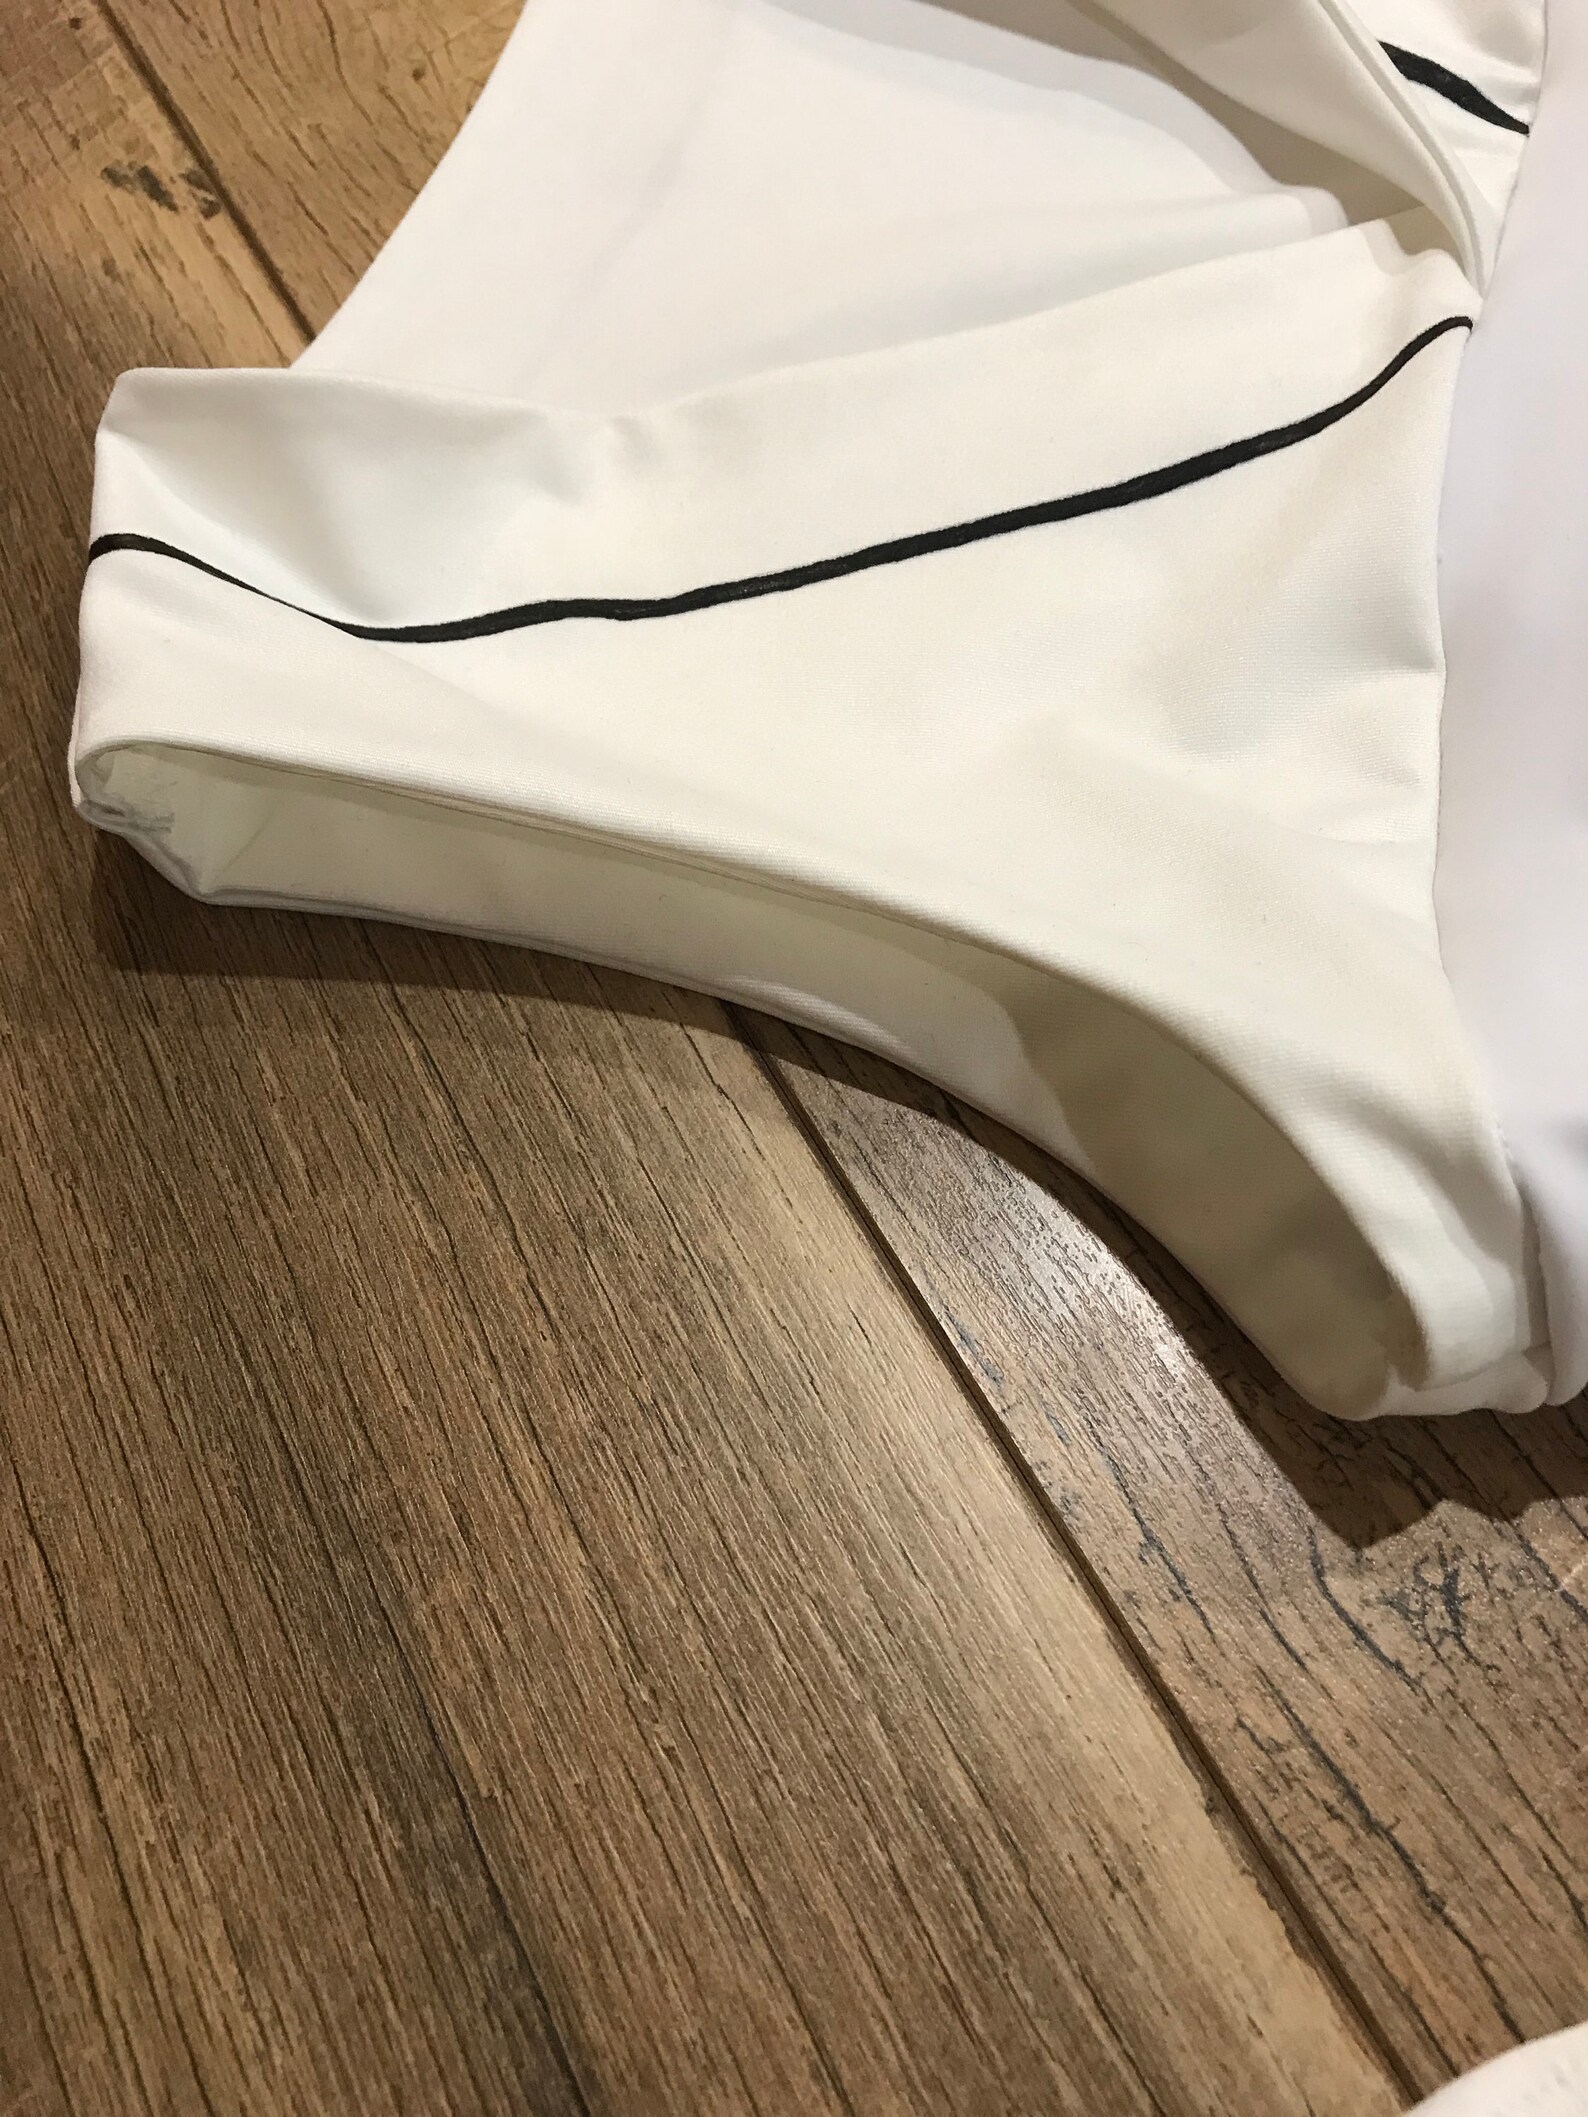 Katara Bathing Suit Made to Order Custom Made | Etsy